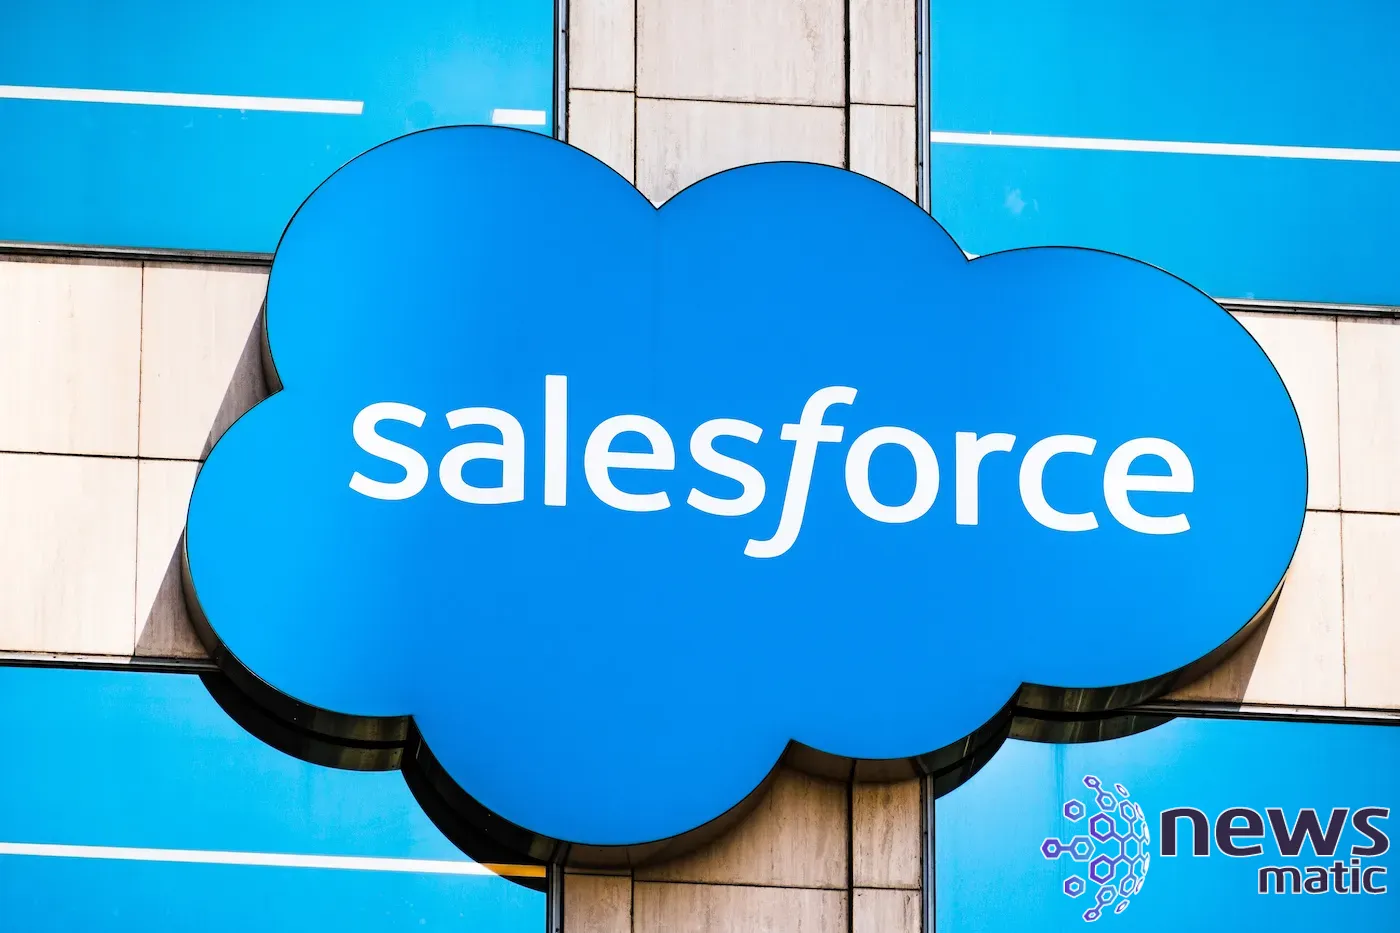 Salesforce lanza plataforma en la nube para clientes de la UE - Hyperforce EU Operating Zone - Big Data | Imagen 1 Newsmatic